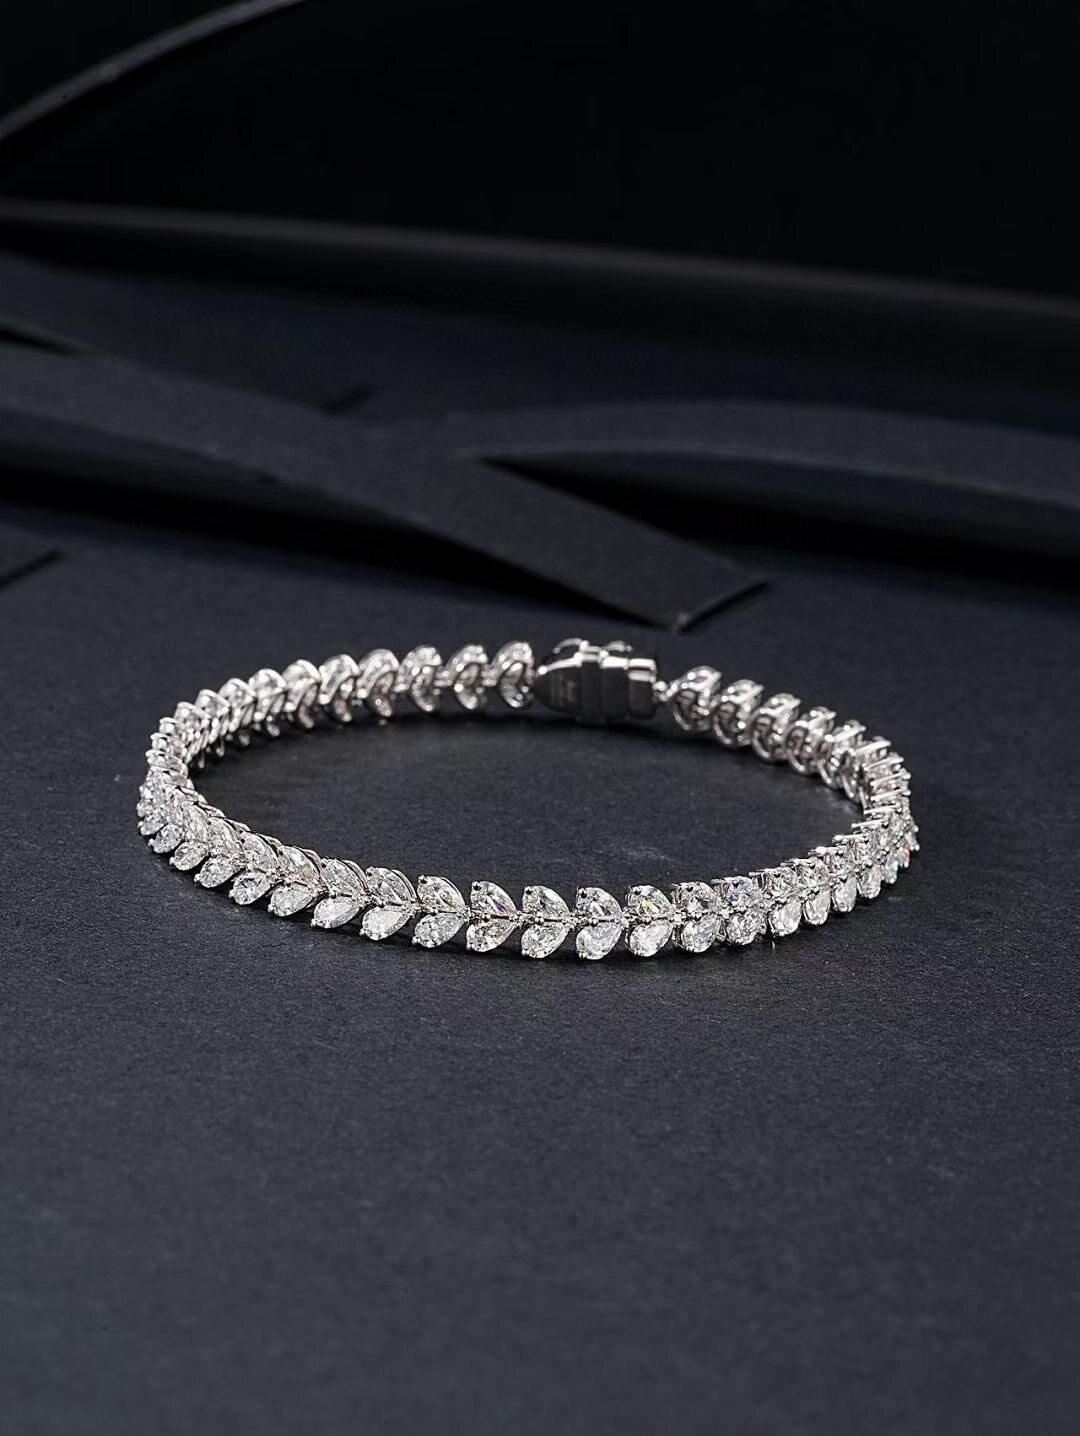 Bracelet Ring Necklace Earrings 